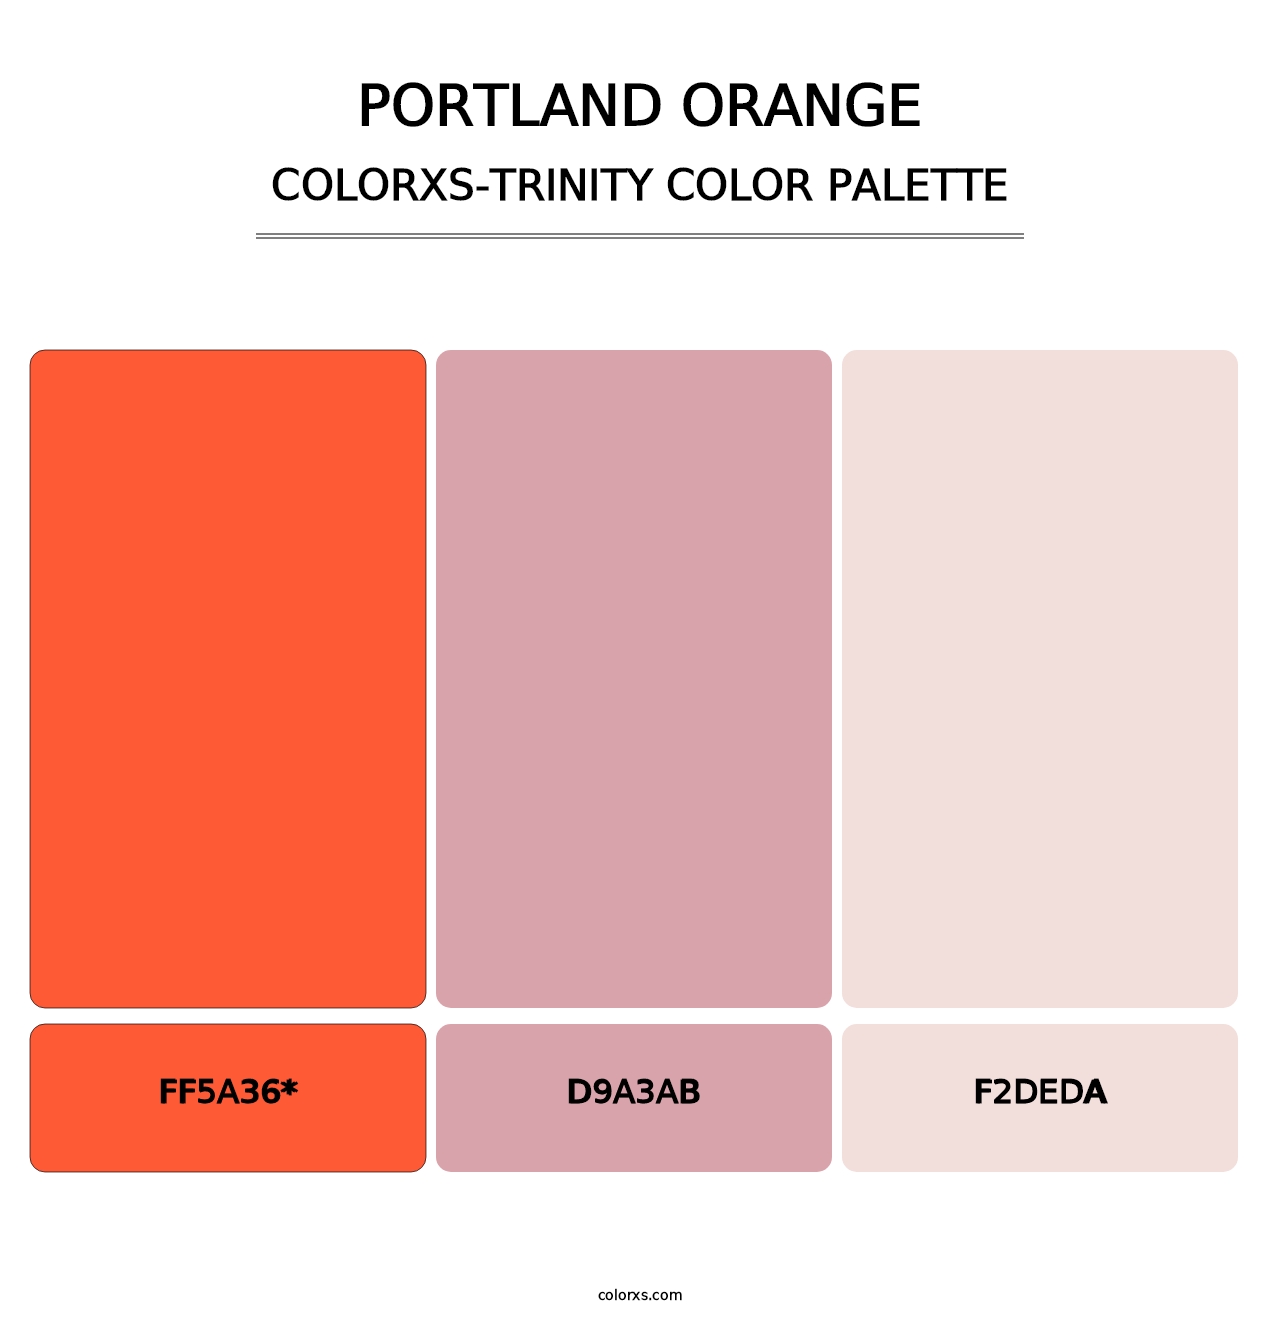 Portland Orange - Colorxs Trinity Palette